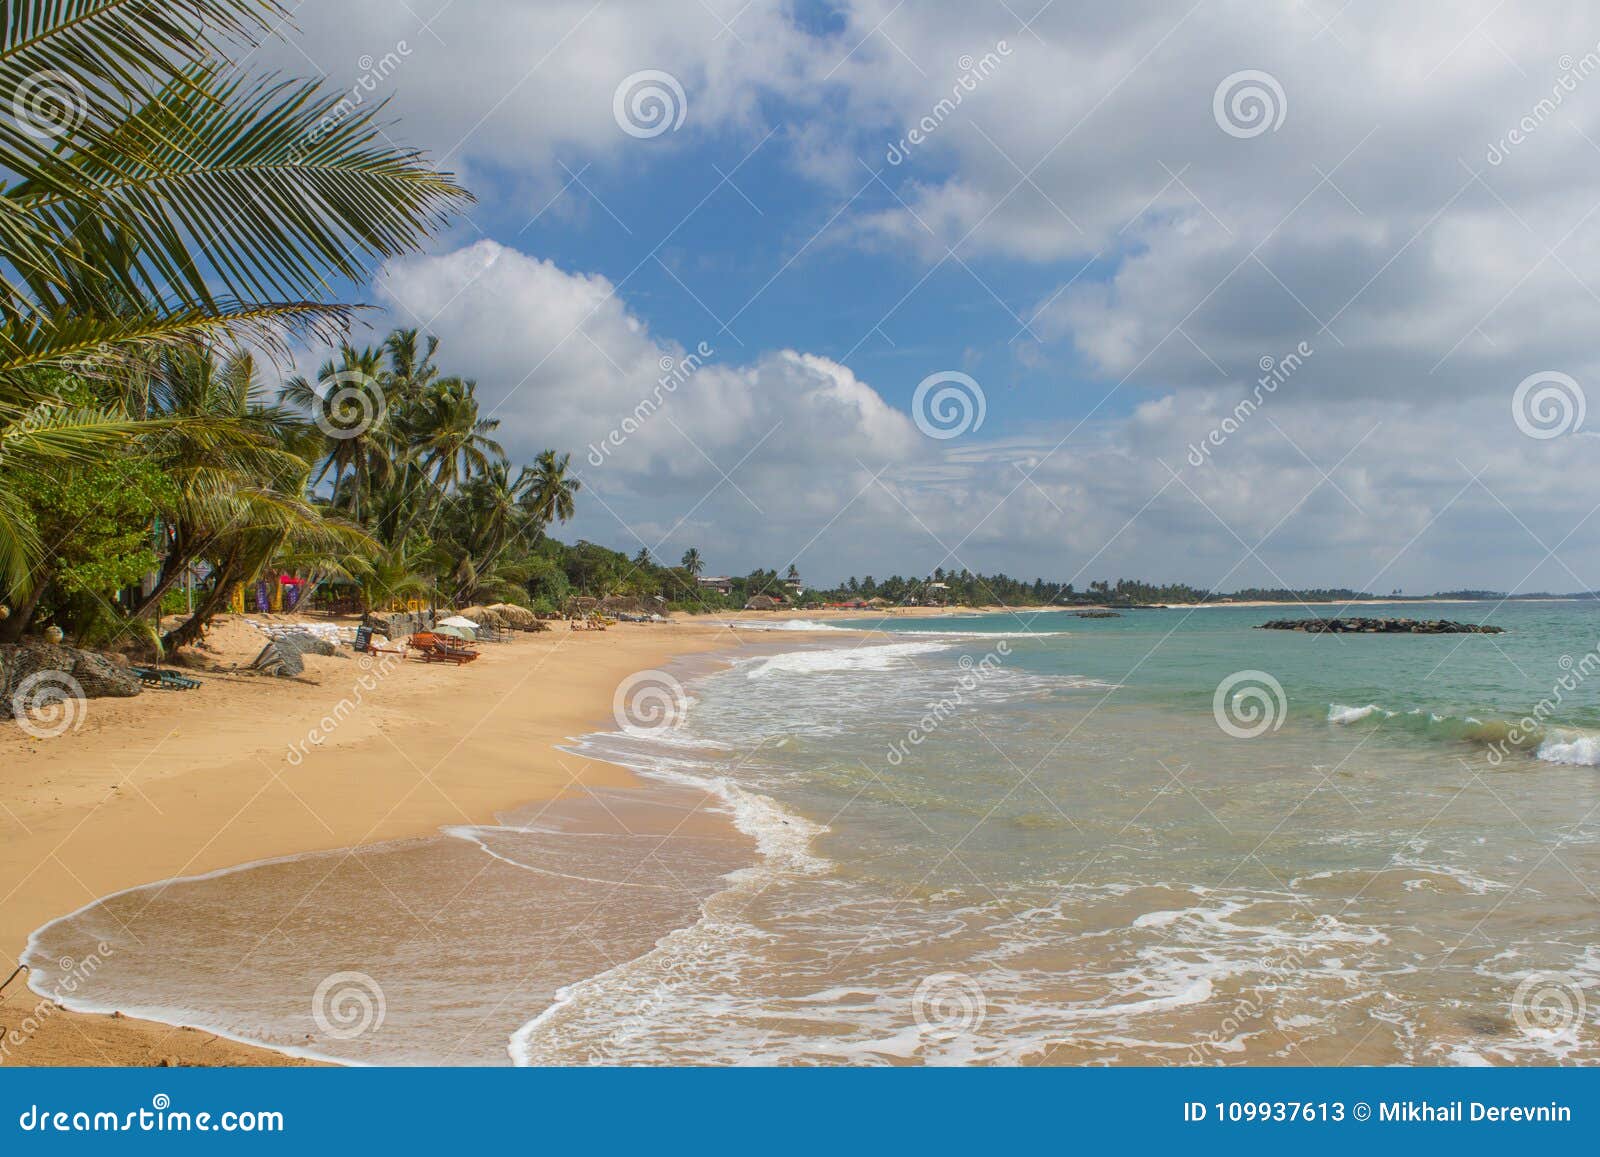 beautiful beach. view of nice tropical beach with palms around.